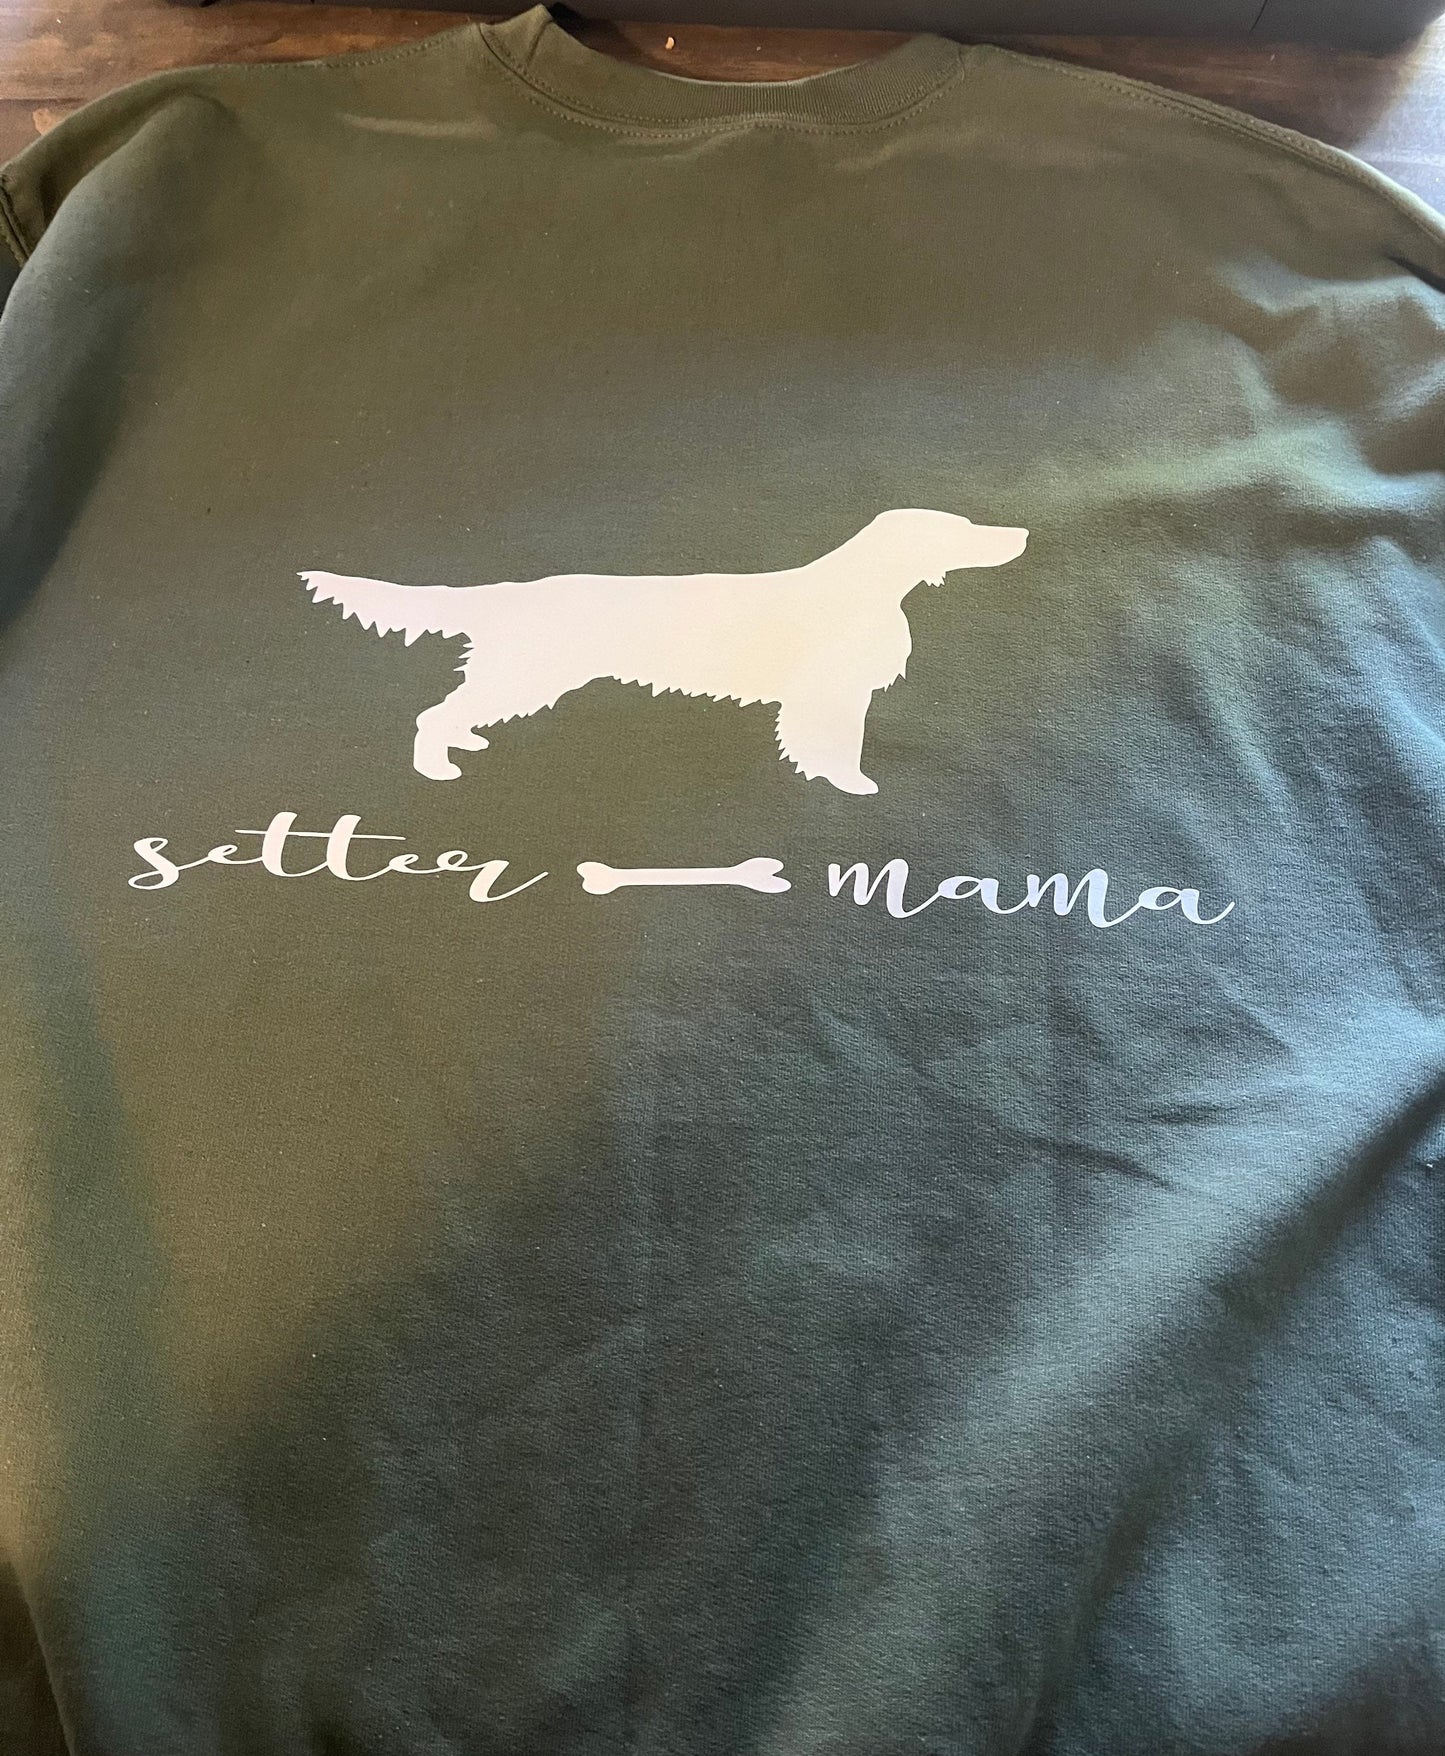 Setter dog mom sweater